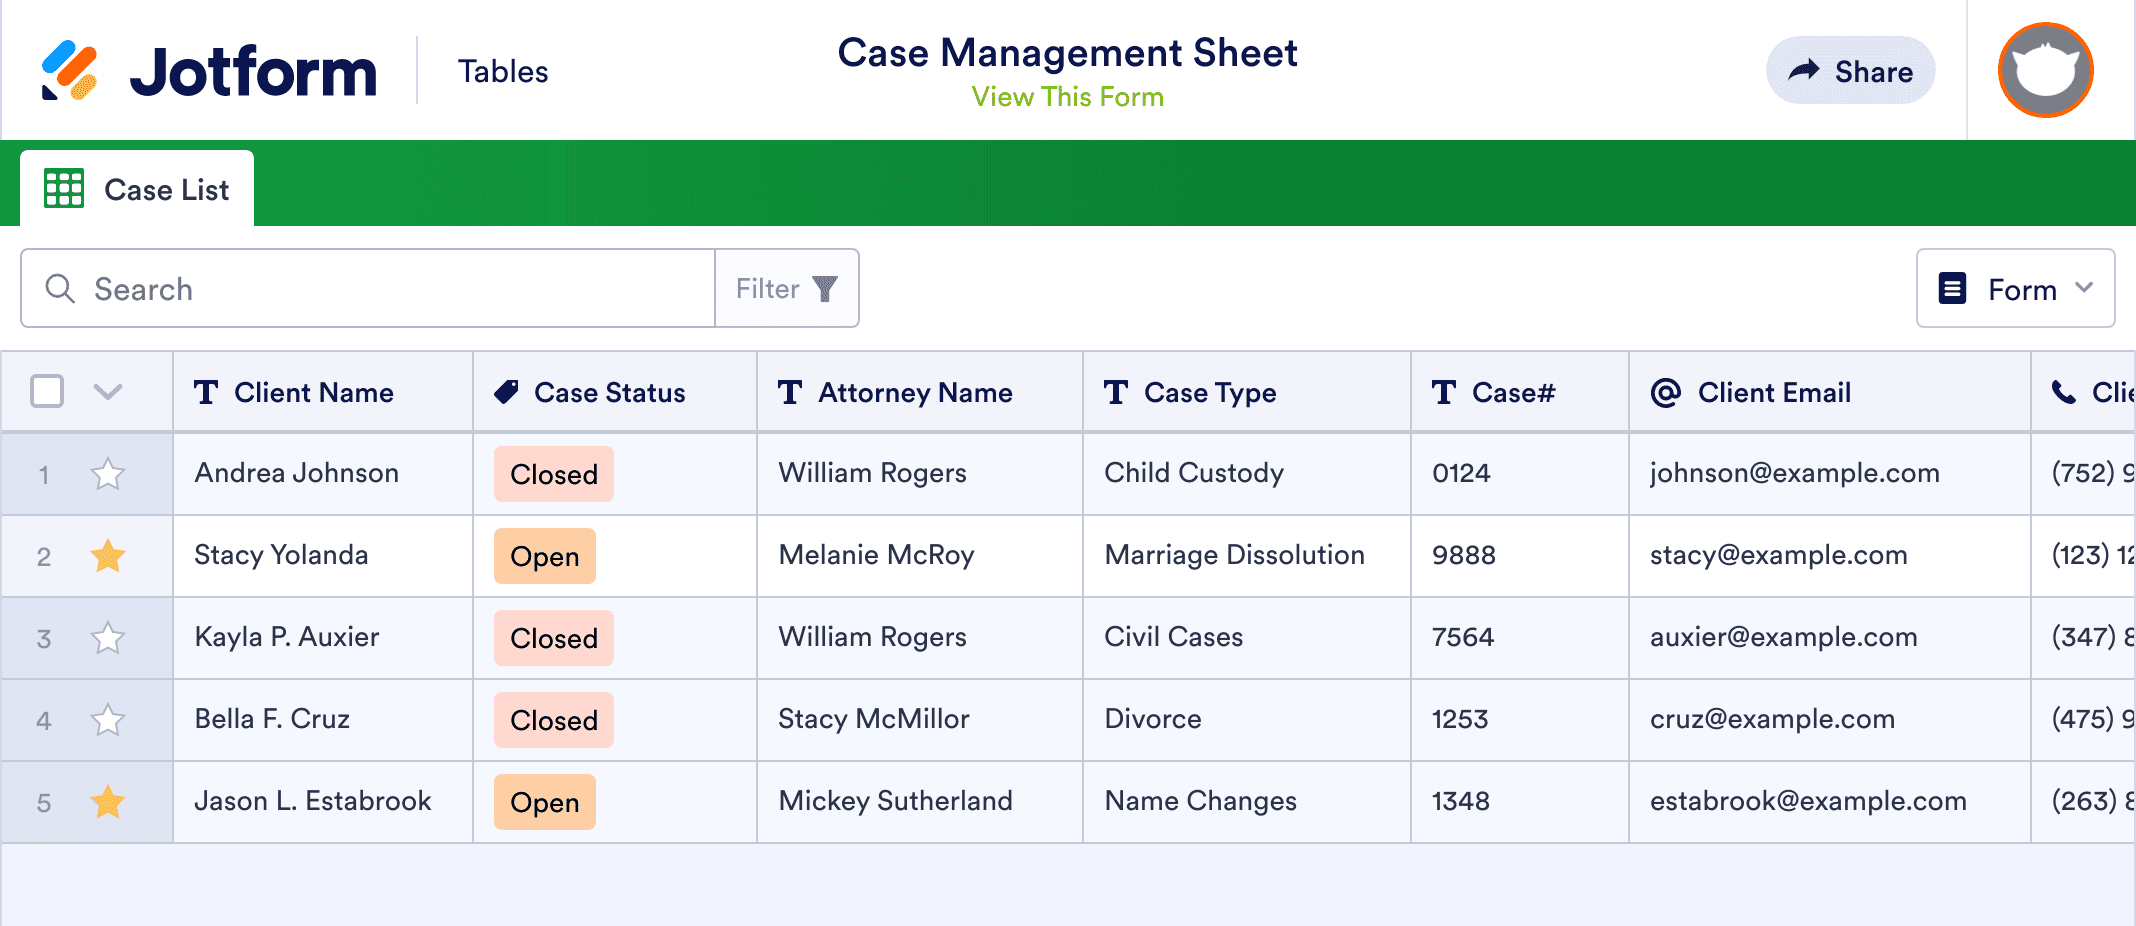 Case Management Sheet